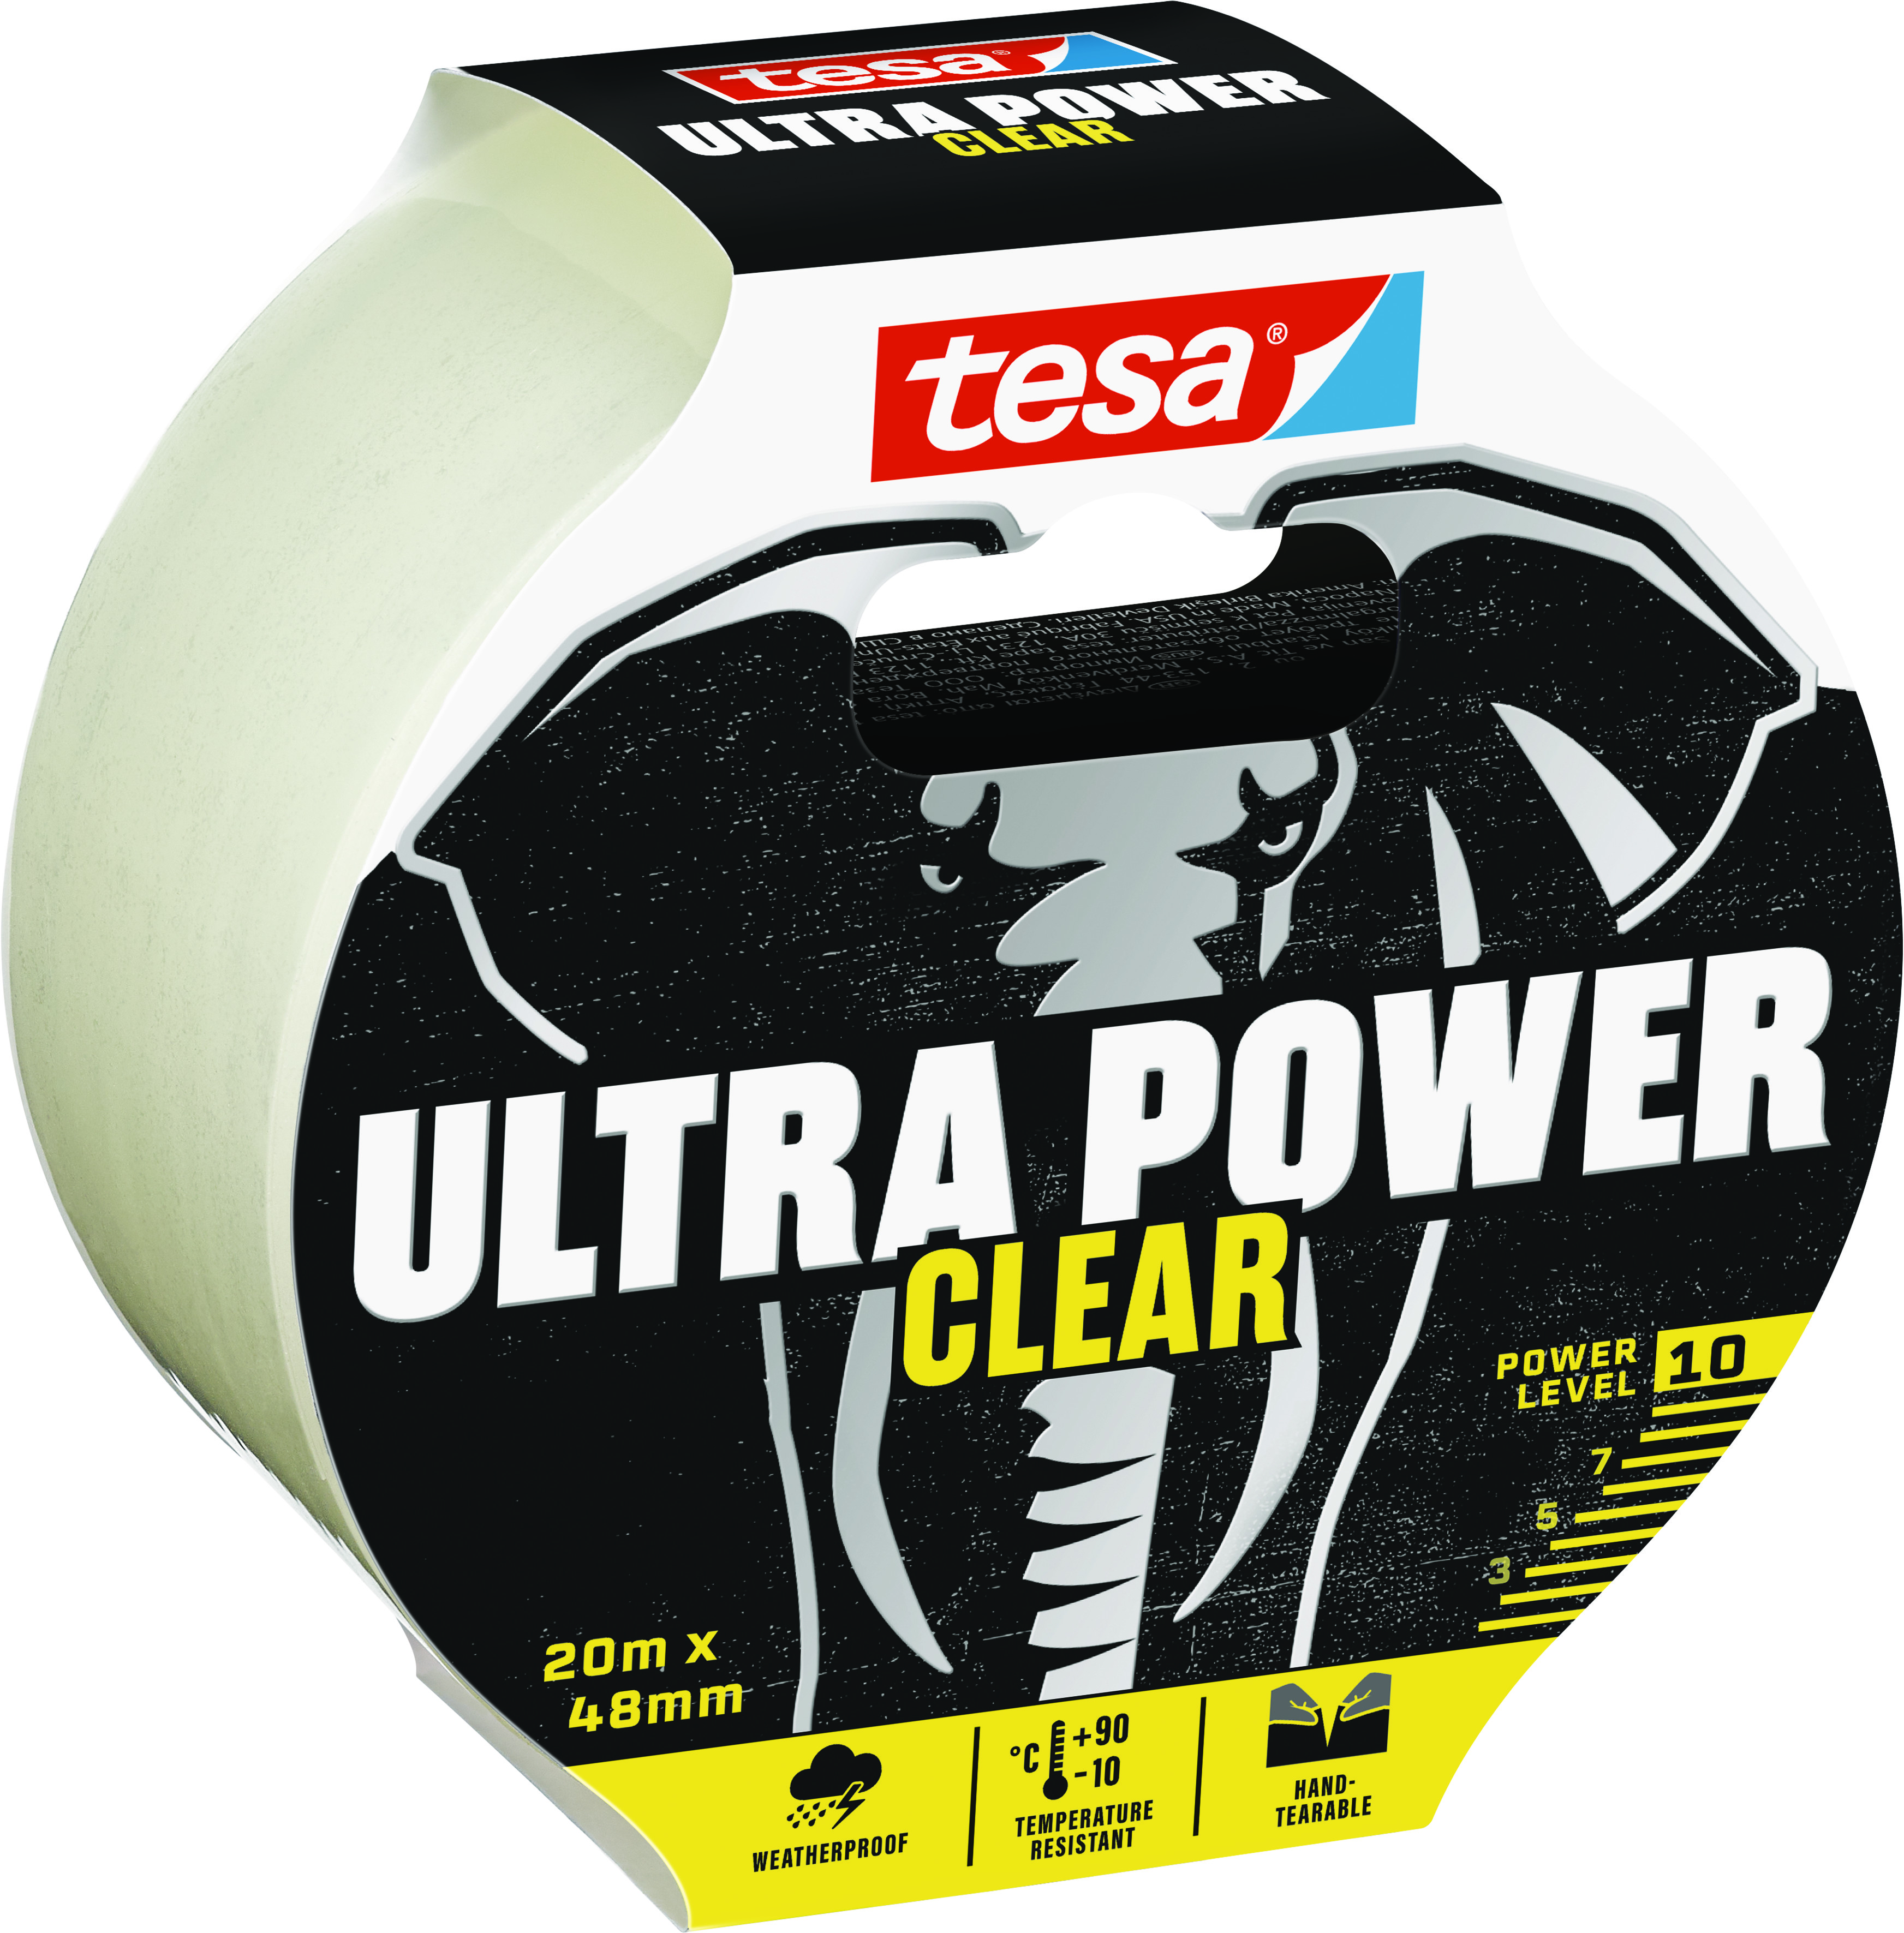 tesa Ultra Power Clear repair